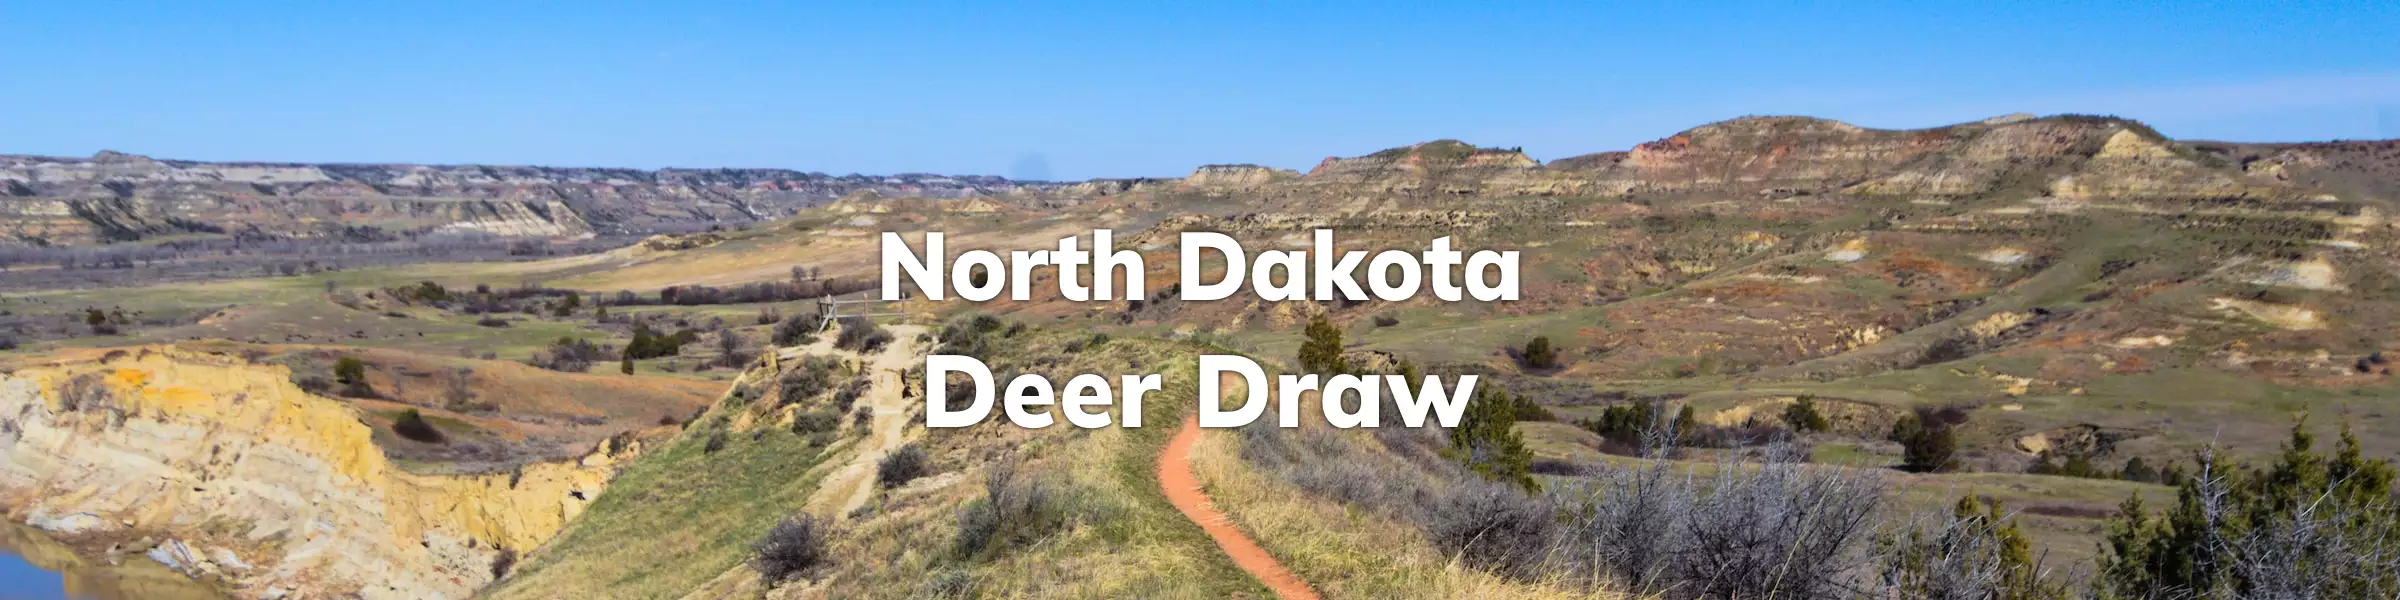 North Dakota Deer Draw